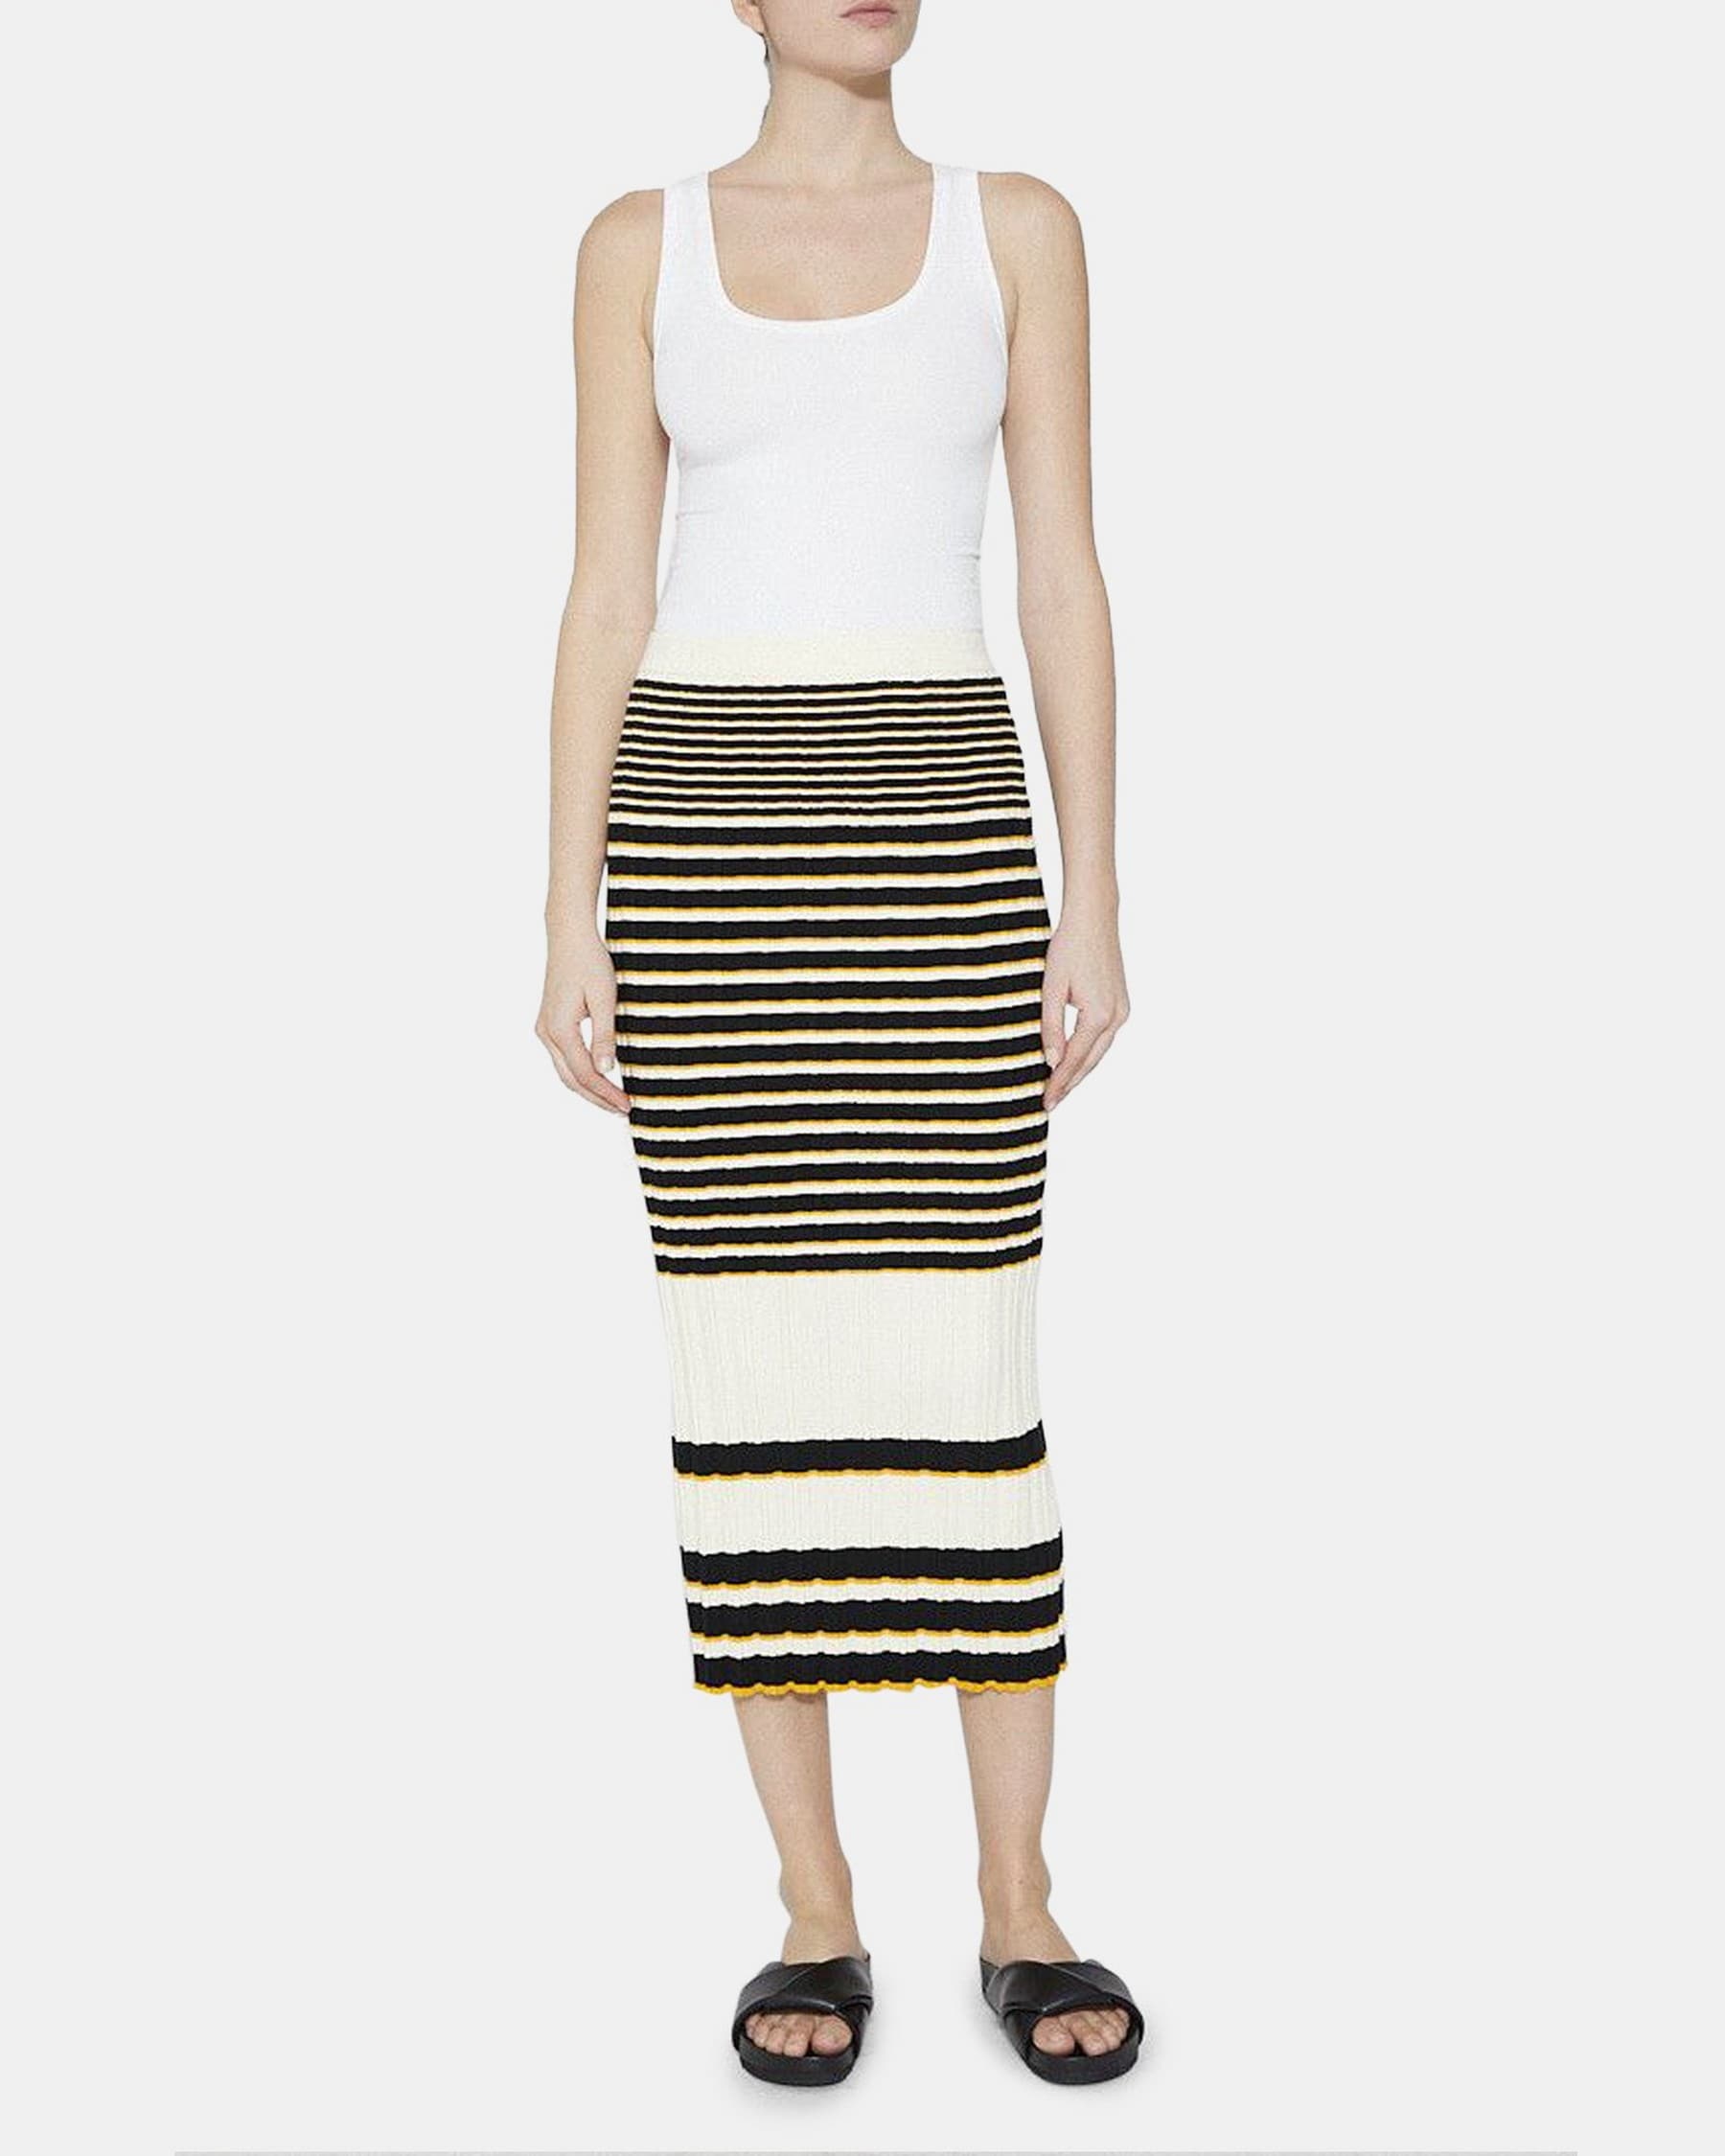 Striped Midi Skirt in Cotton Blend Rib Knit